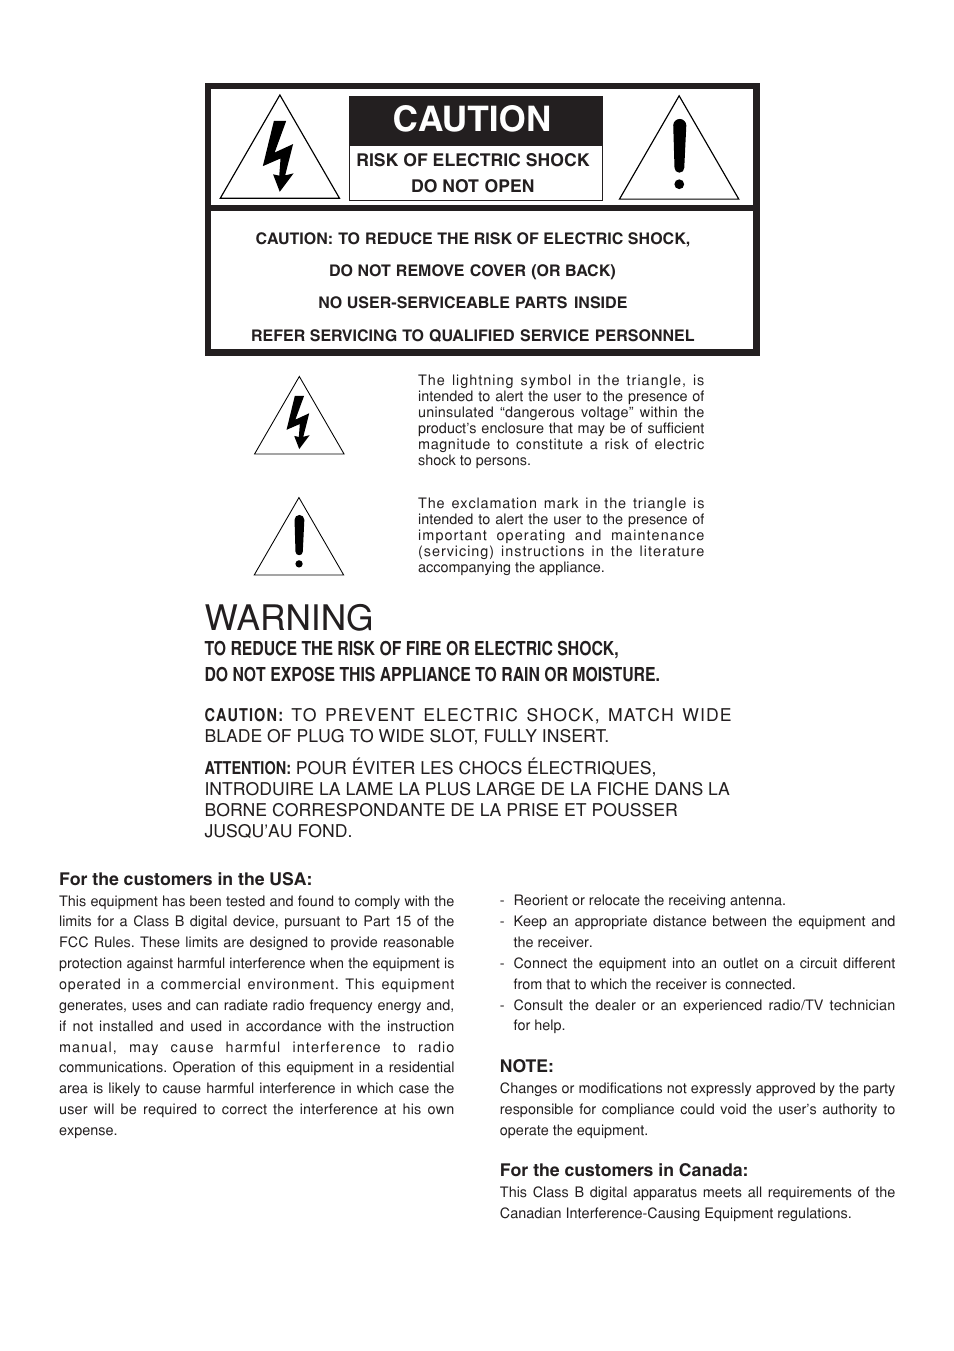 Caution, Warning | Marantz VP-12S1s User Manual | Page 2 / 30